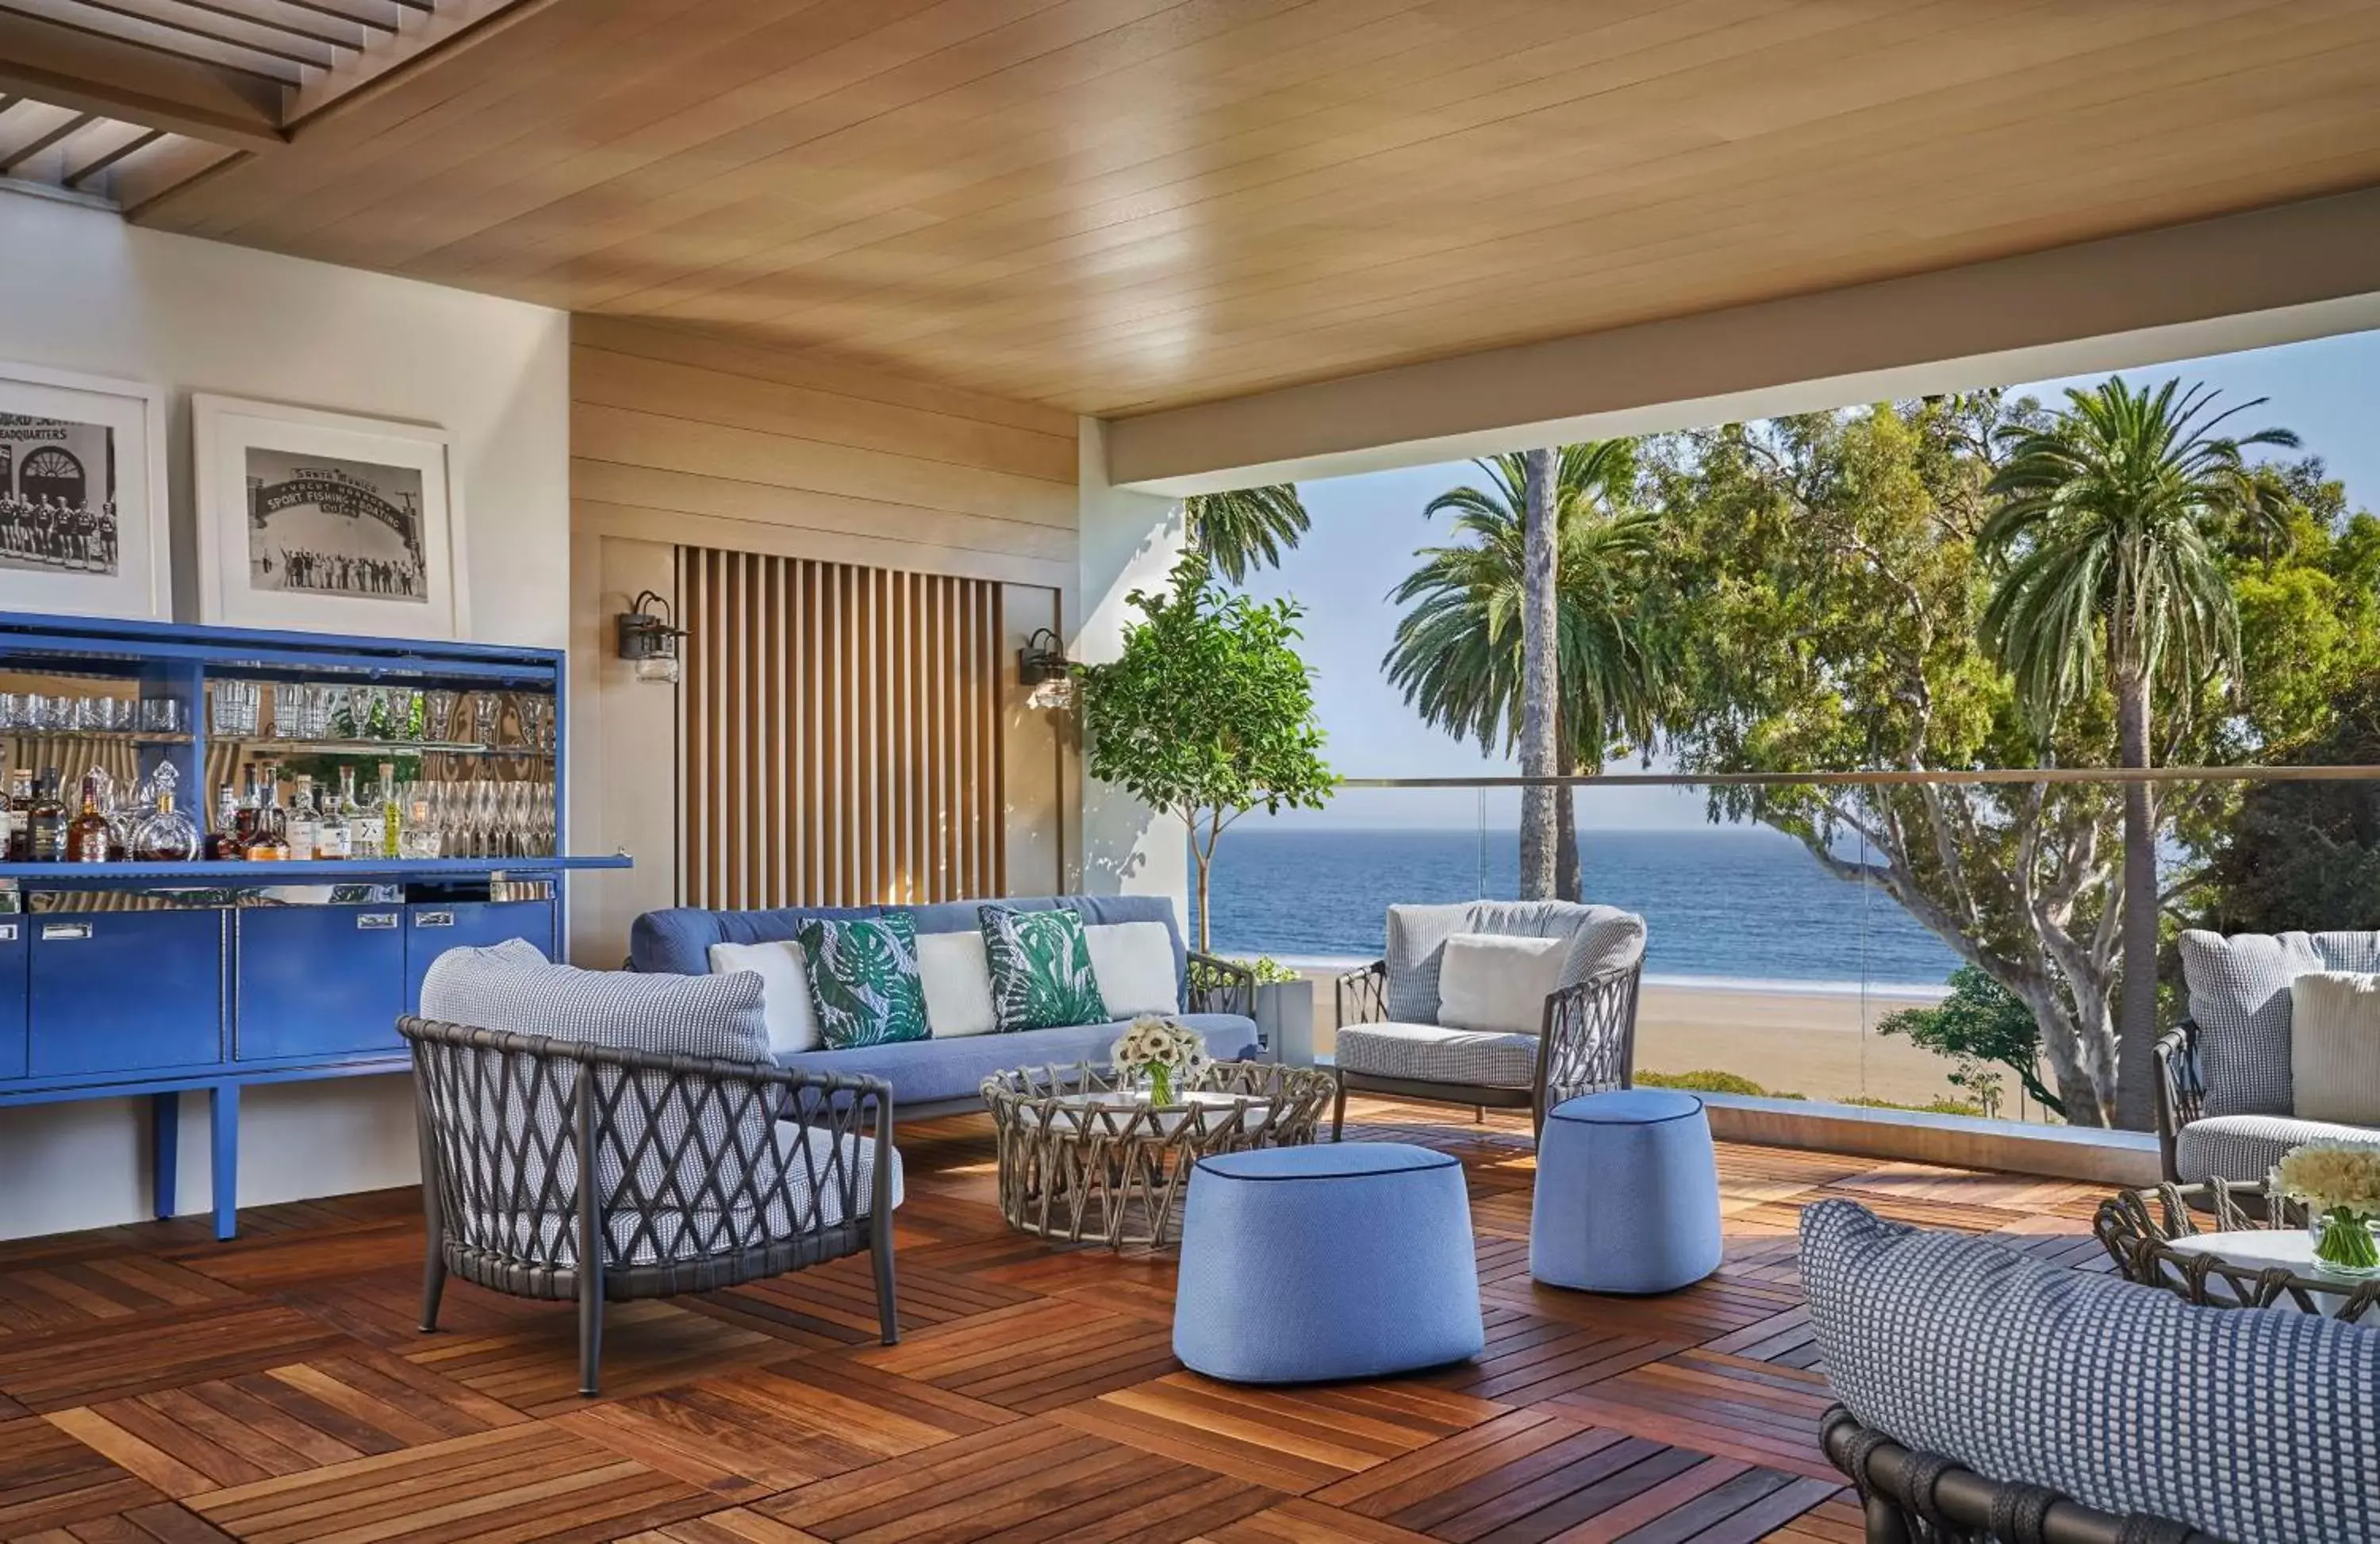 Lobby or reception in Oceana Santa Monica, LXR Hotels & Resorts